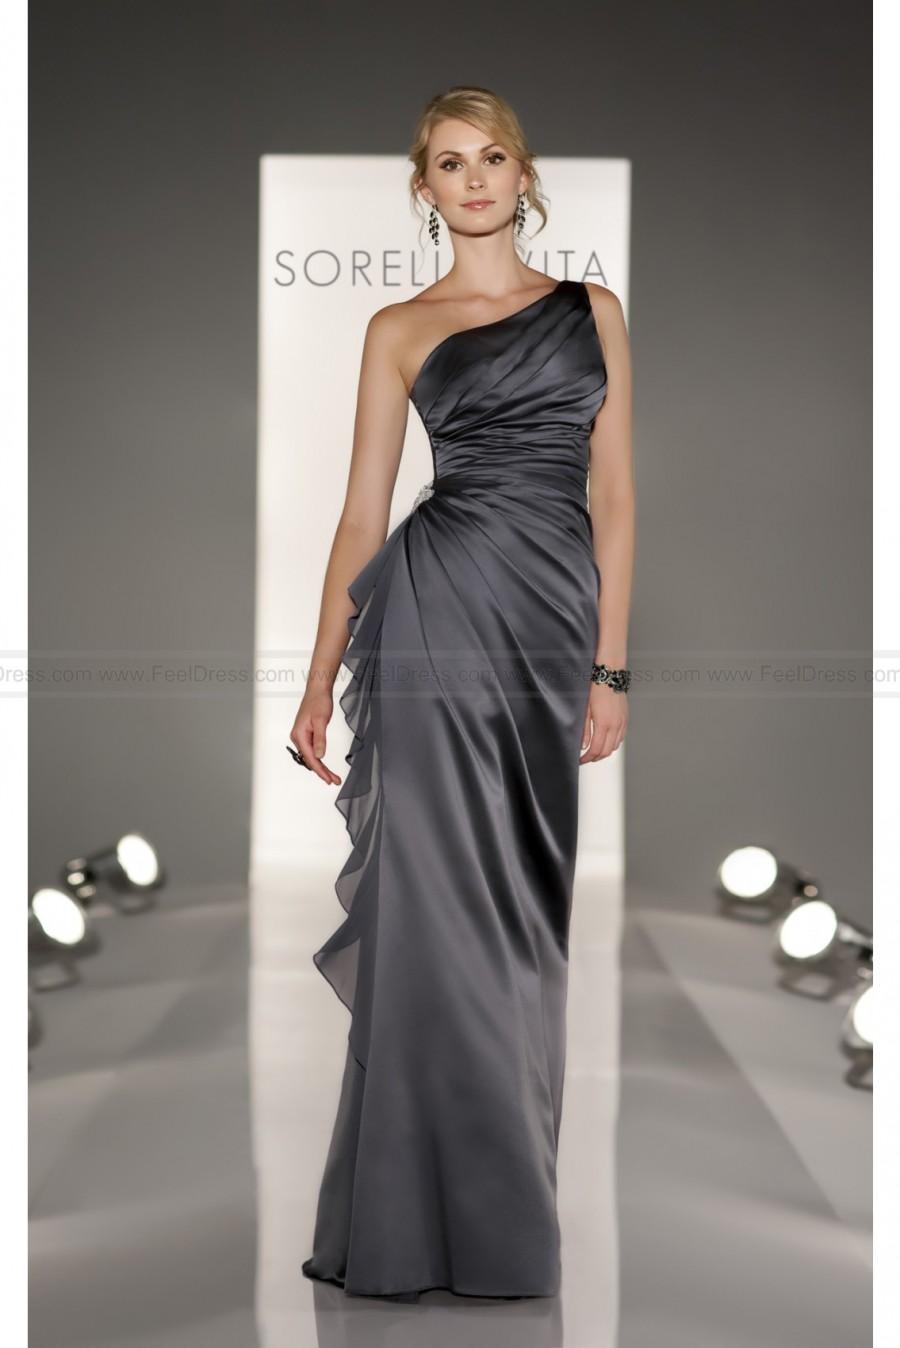 Mariage - Sorella Vita Grey Bridesmaid Dress Style 8191